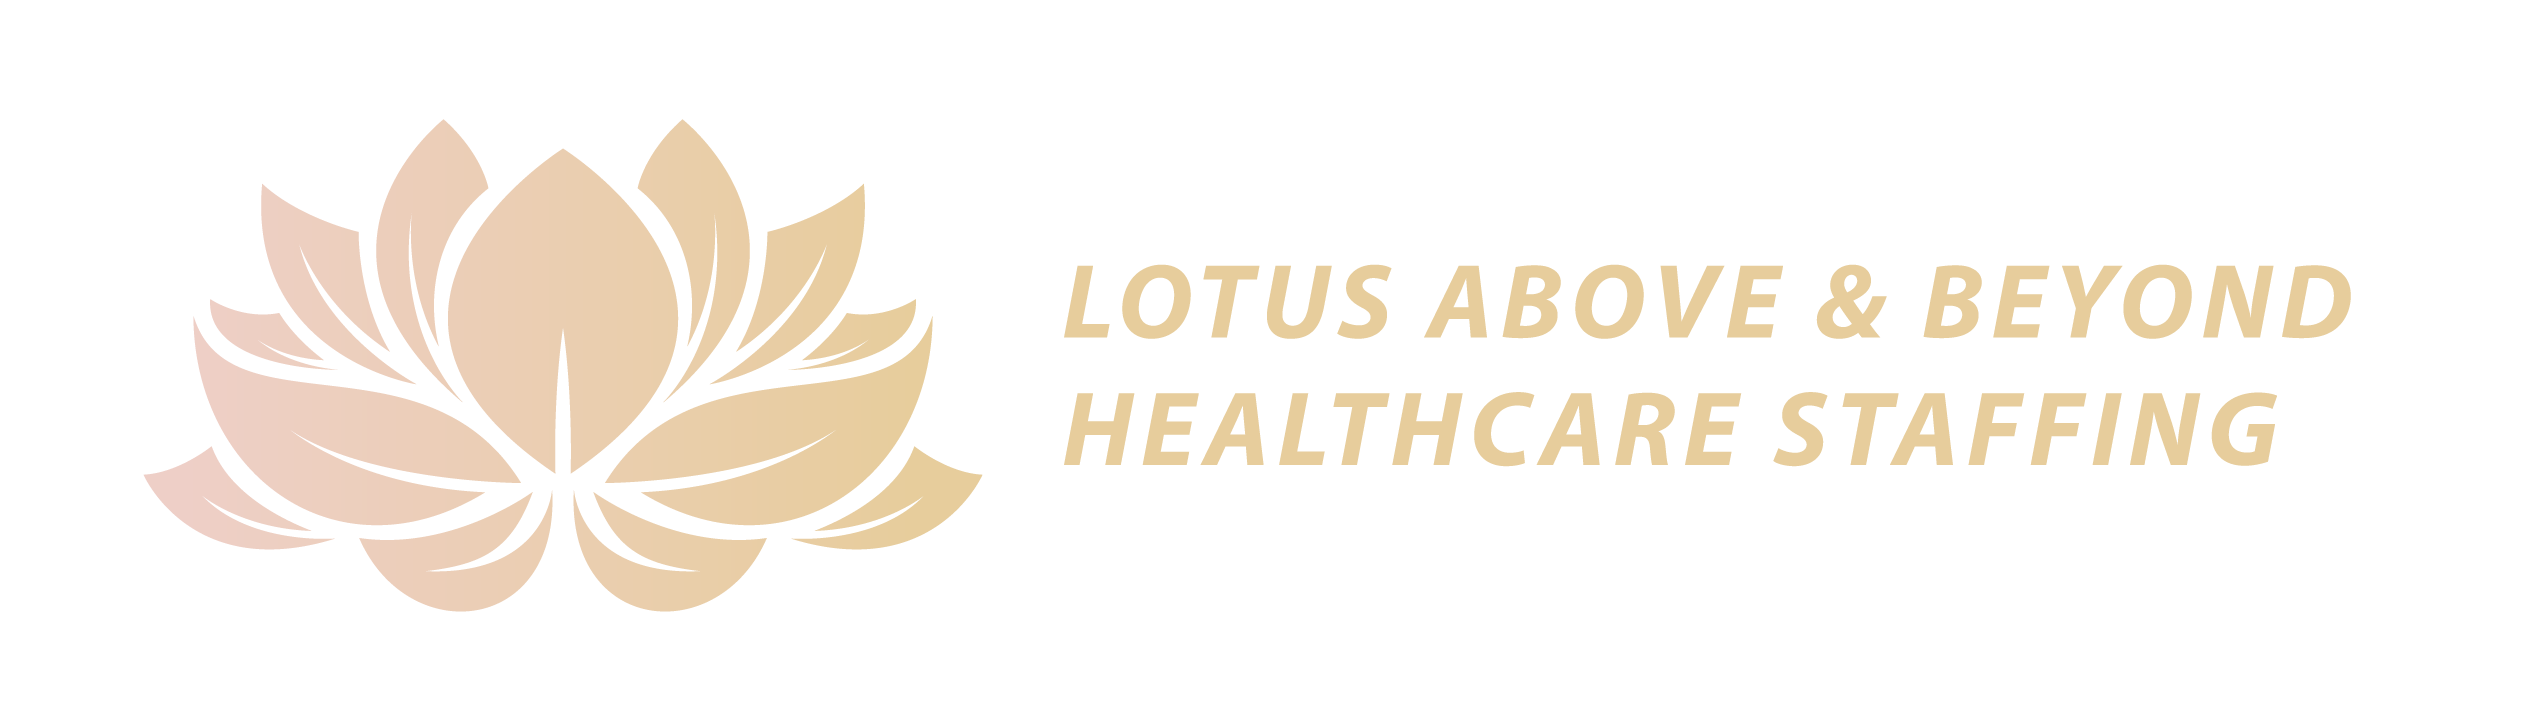 lotus logo colored